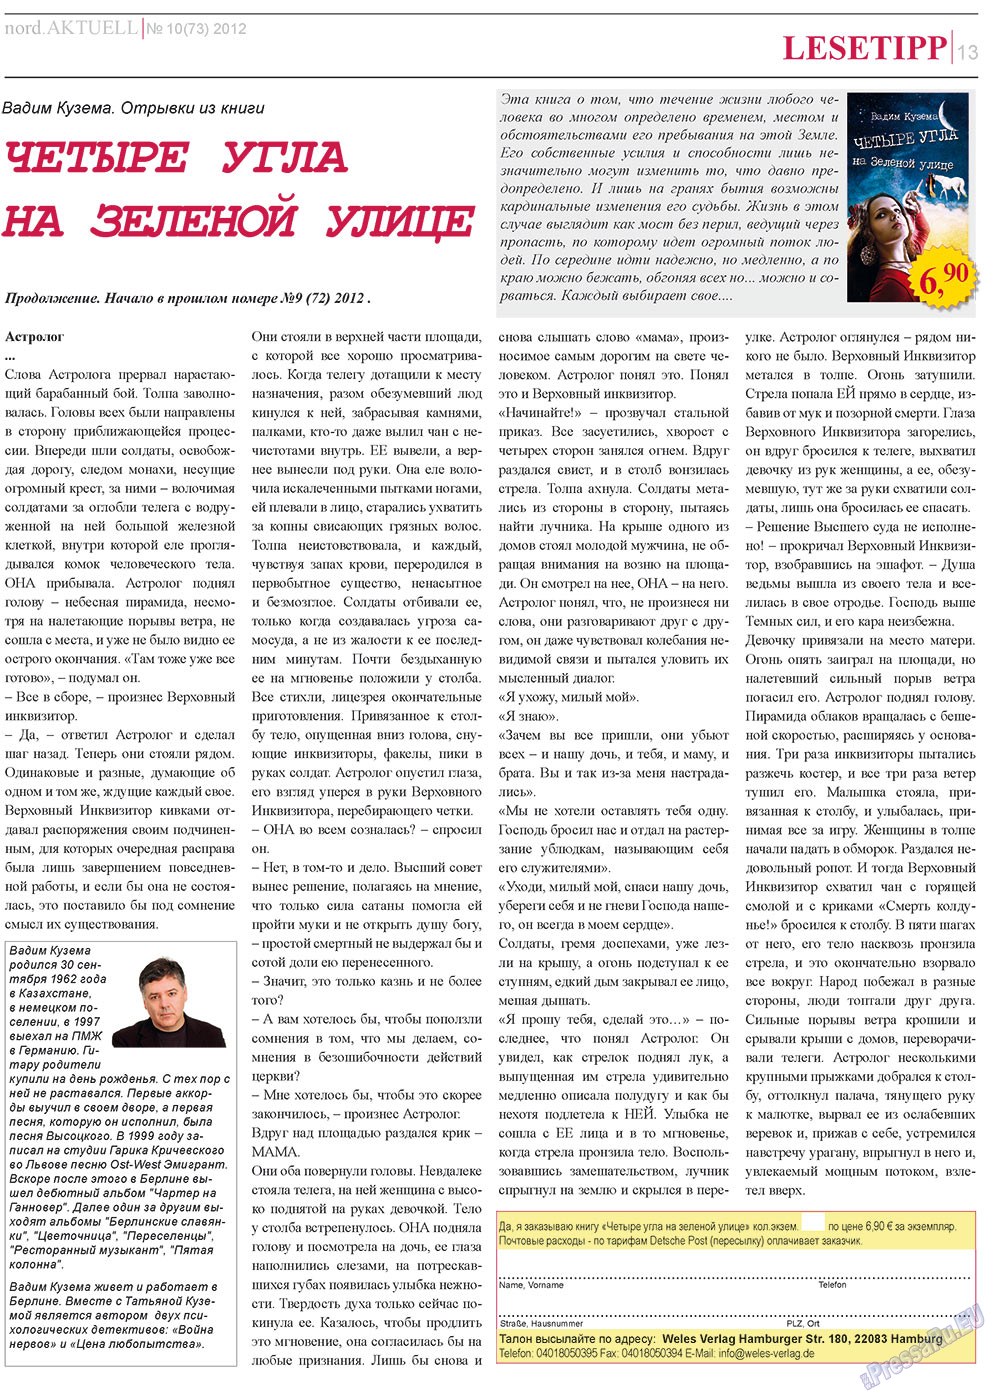 nord.Aktuell (газета). 2012 год, номер 10, стр. 13